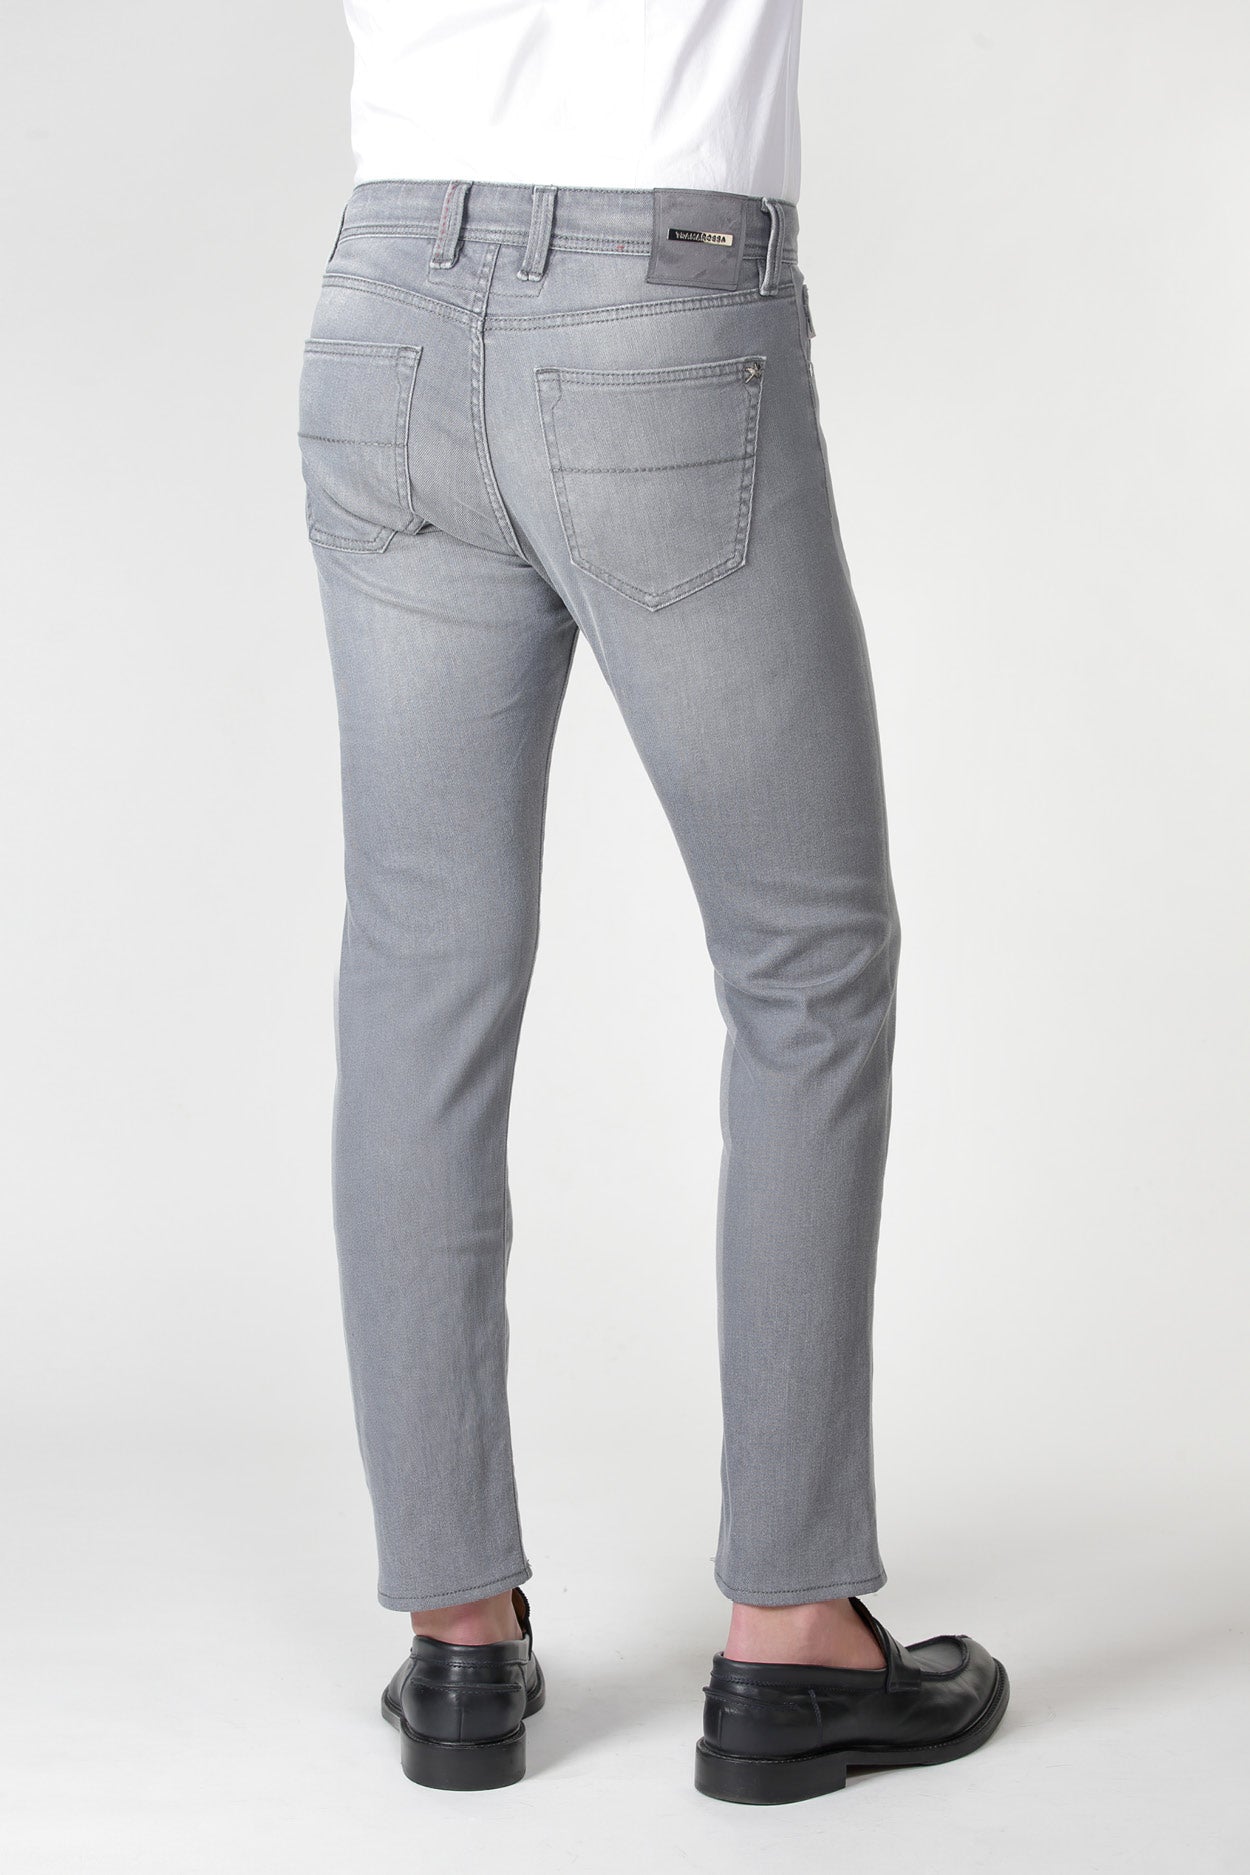 Tramarossa Jeans - BASIC DENIM - Model: MICHELANGELO